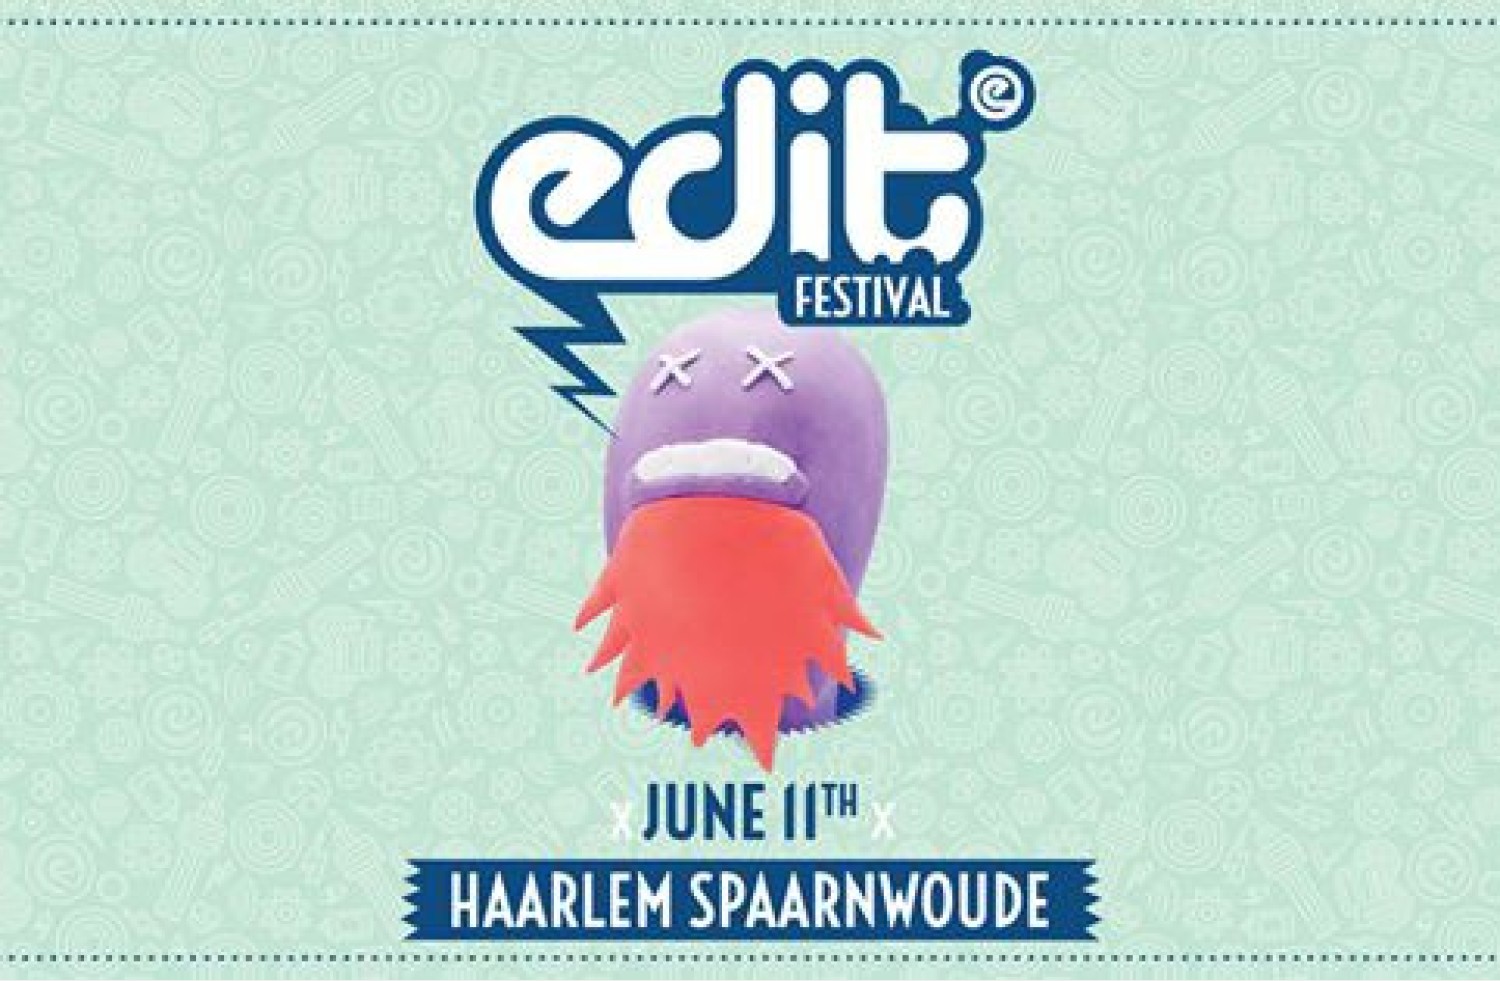 Party report: Edit Festival 2016, Haarlem (11-06-2016)